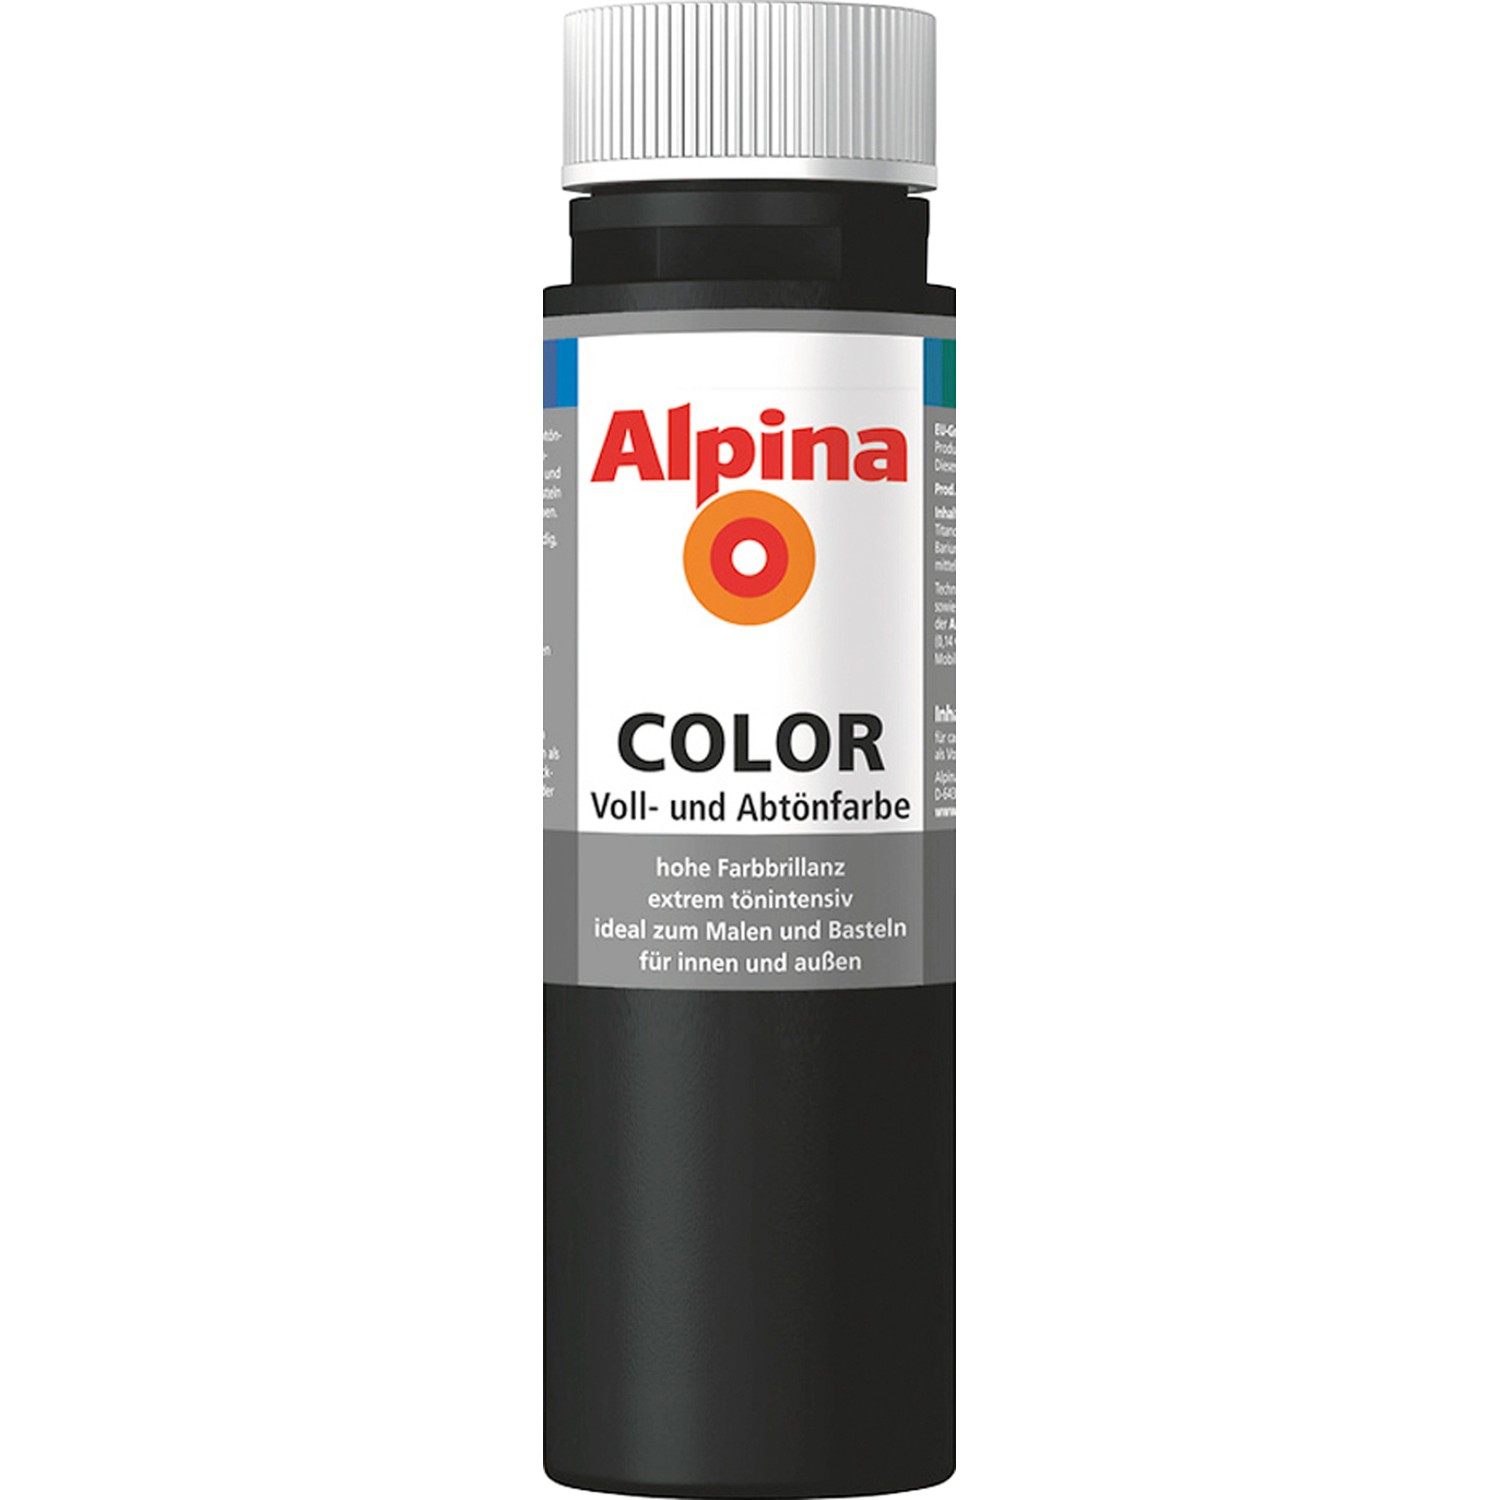 Alpina Color Night Black seidenmatt 250 ml von Alpina